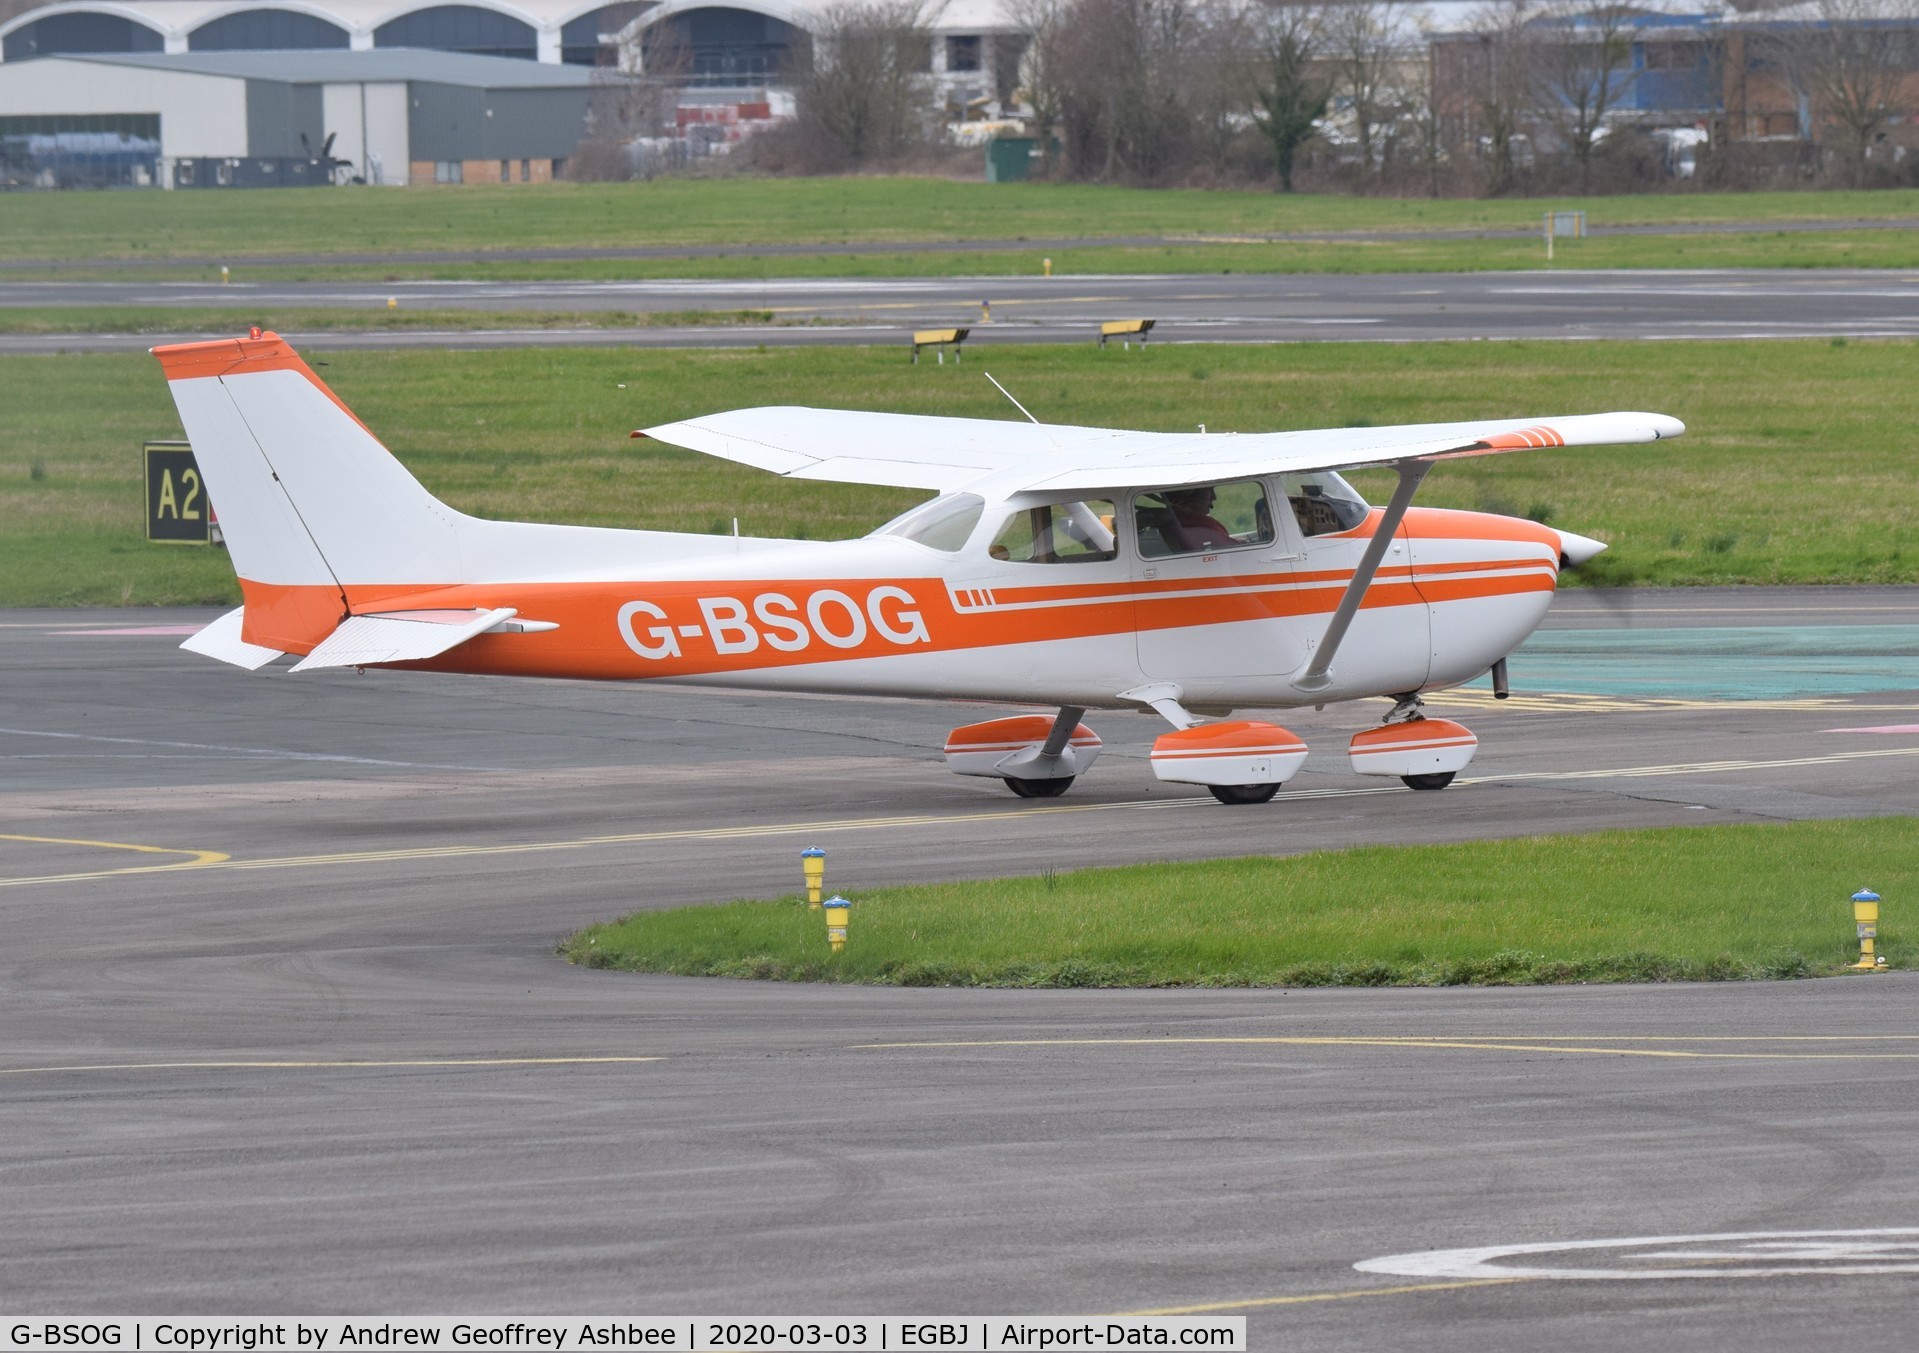 G-BSOG, 1974 Cessna 172M C/N 172-63636, G-BSOG at Gloucestershire Airport.